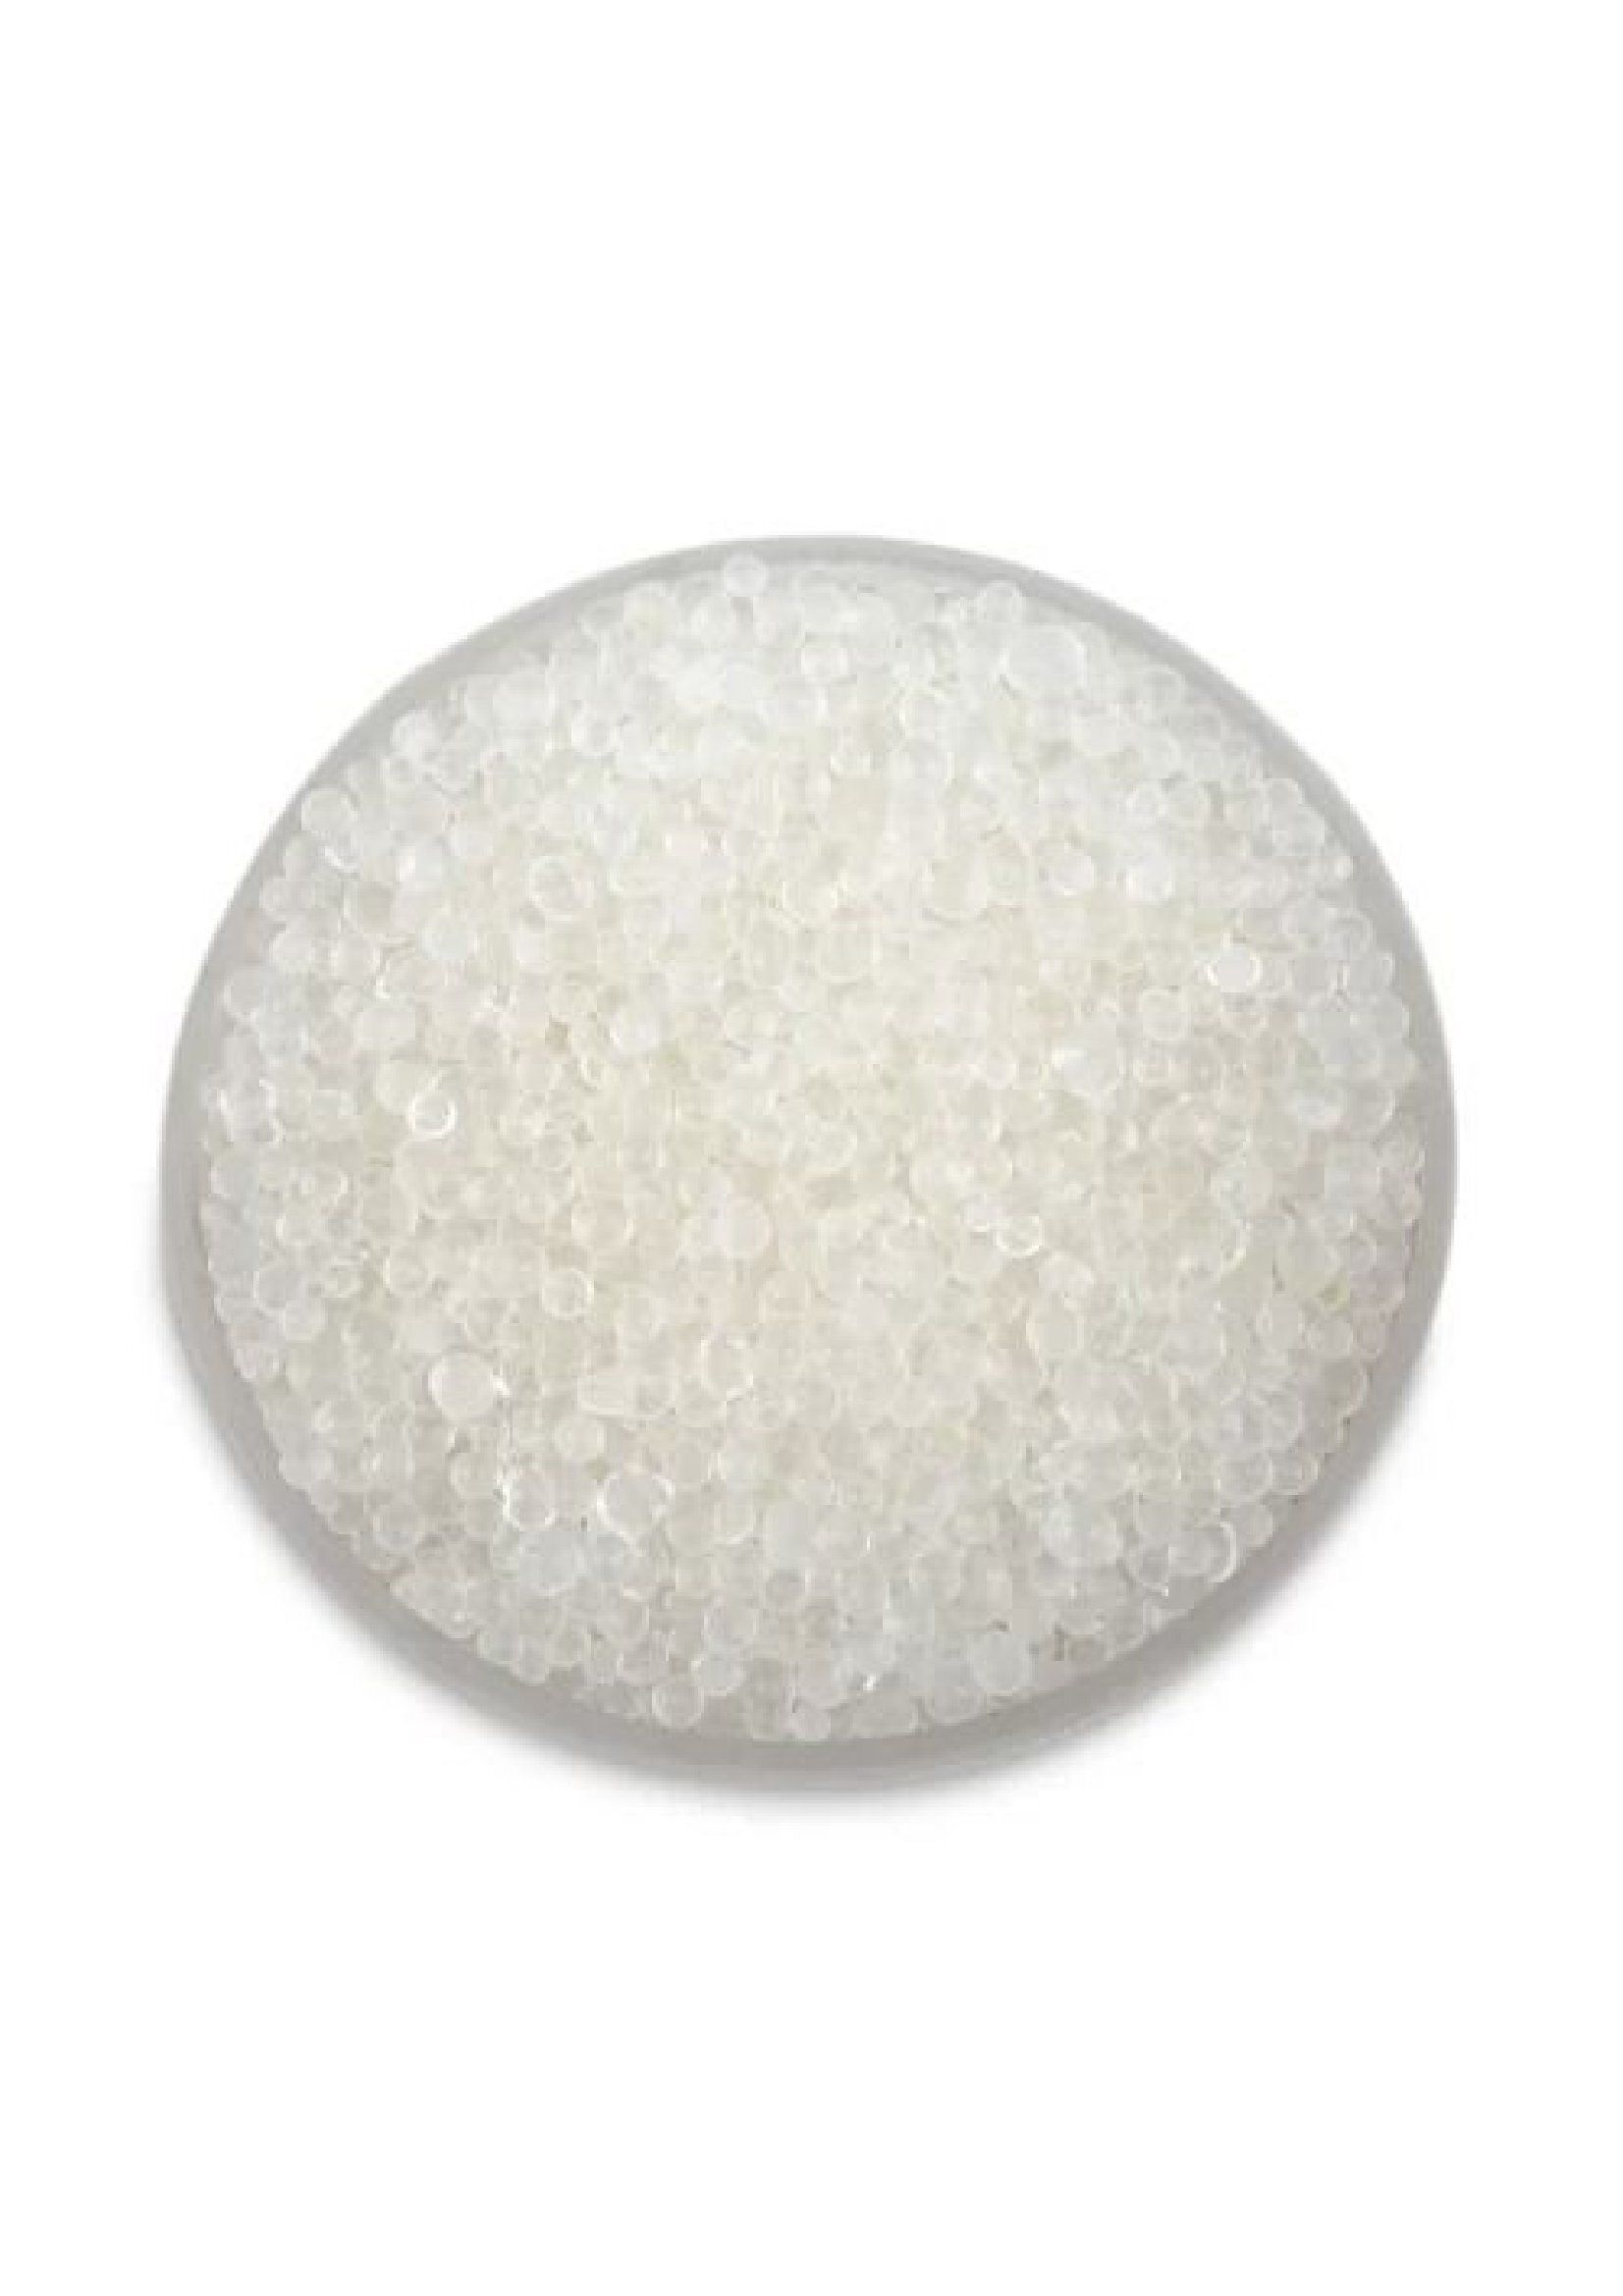 White Beads Silica Gel